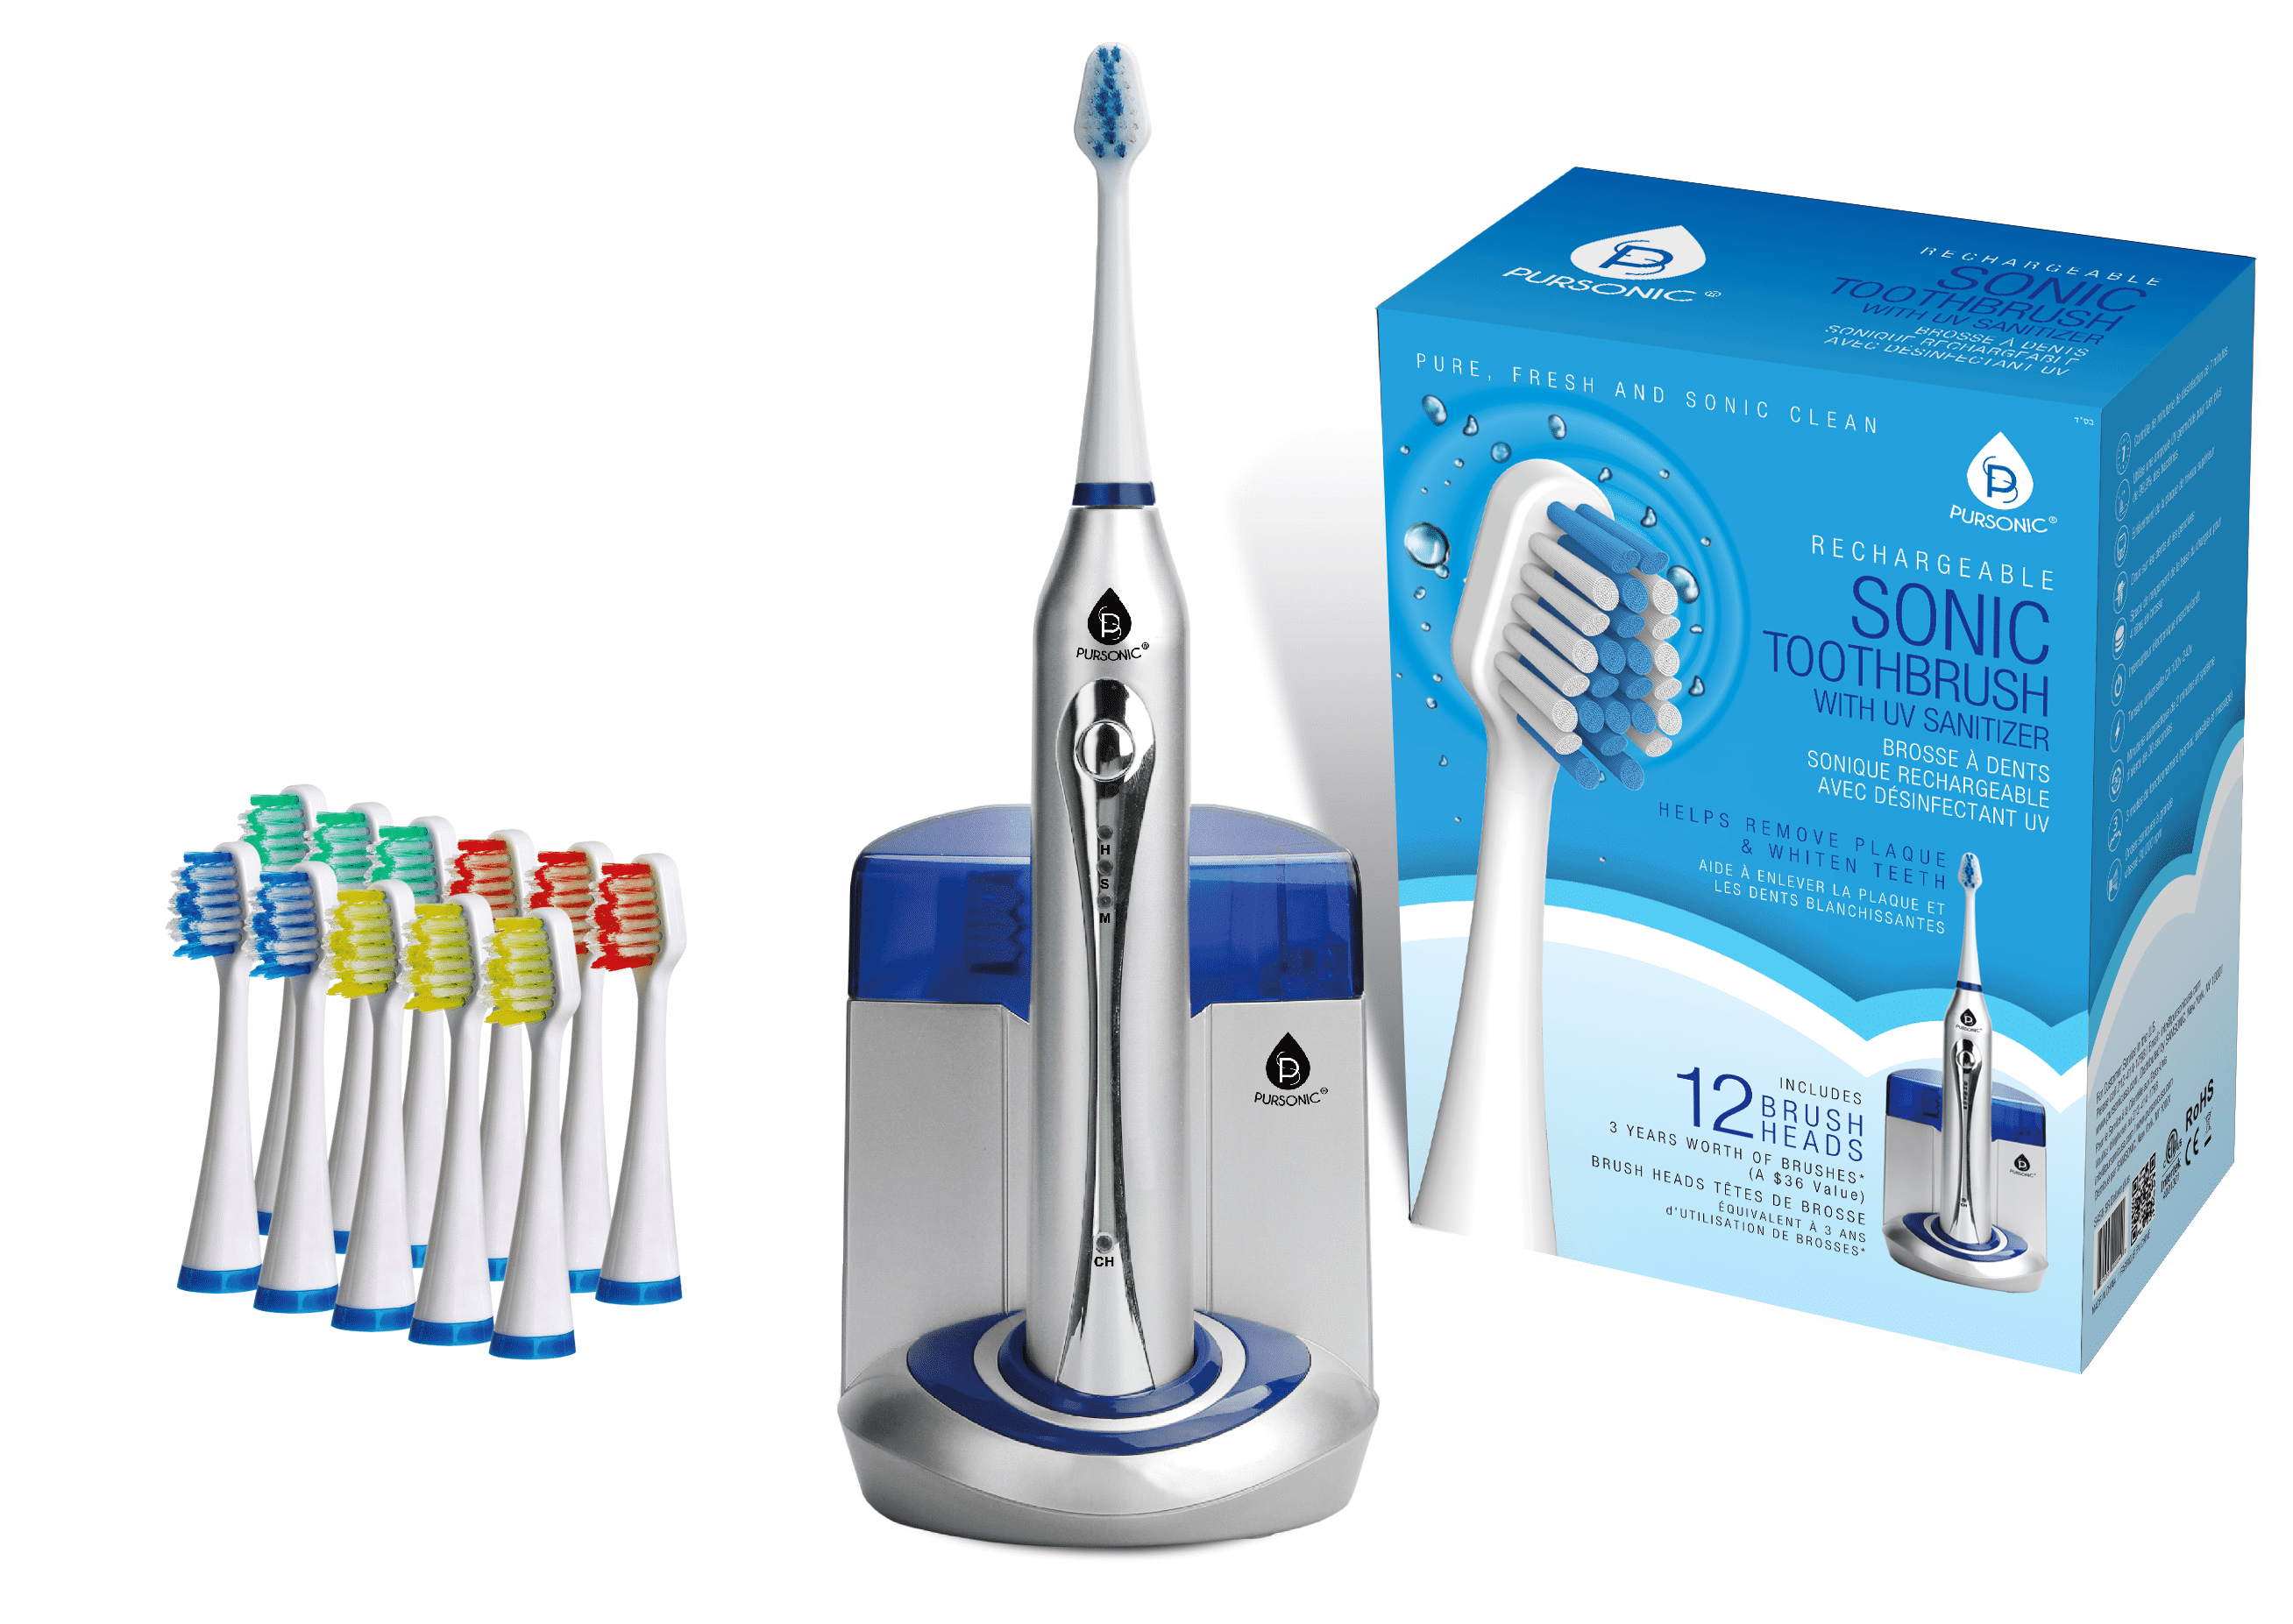 Электрическая зубная щетка х-3 Sonic Toothbrush белая. Зубная щетка x3 Sonic Toothbrush. Зубная щетка Aquasonic насадки. Sonic brush